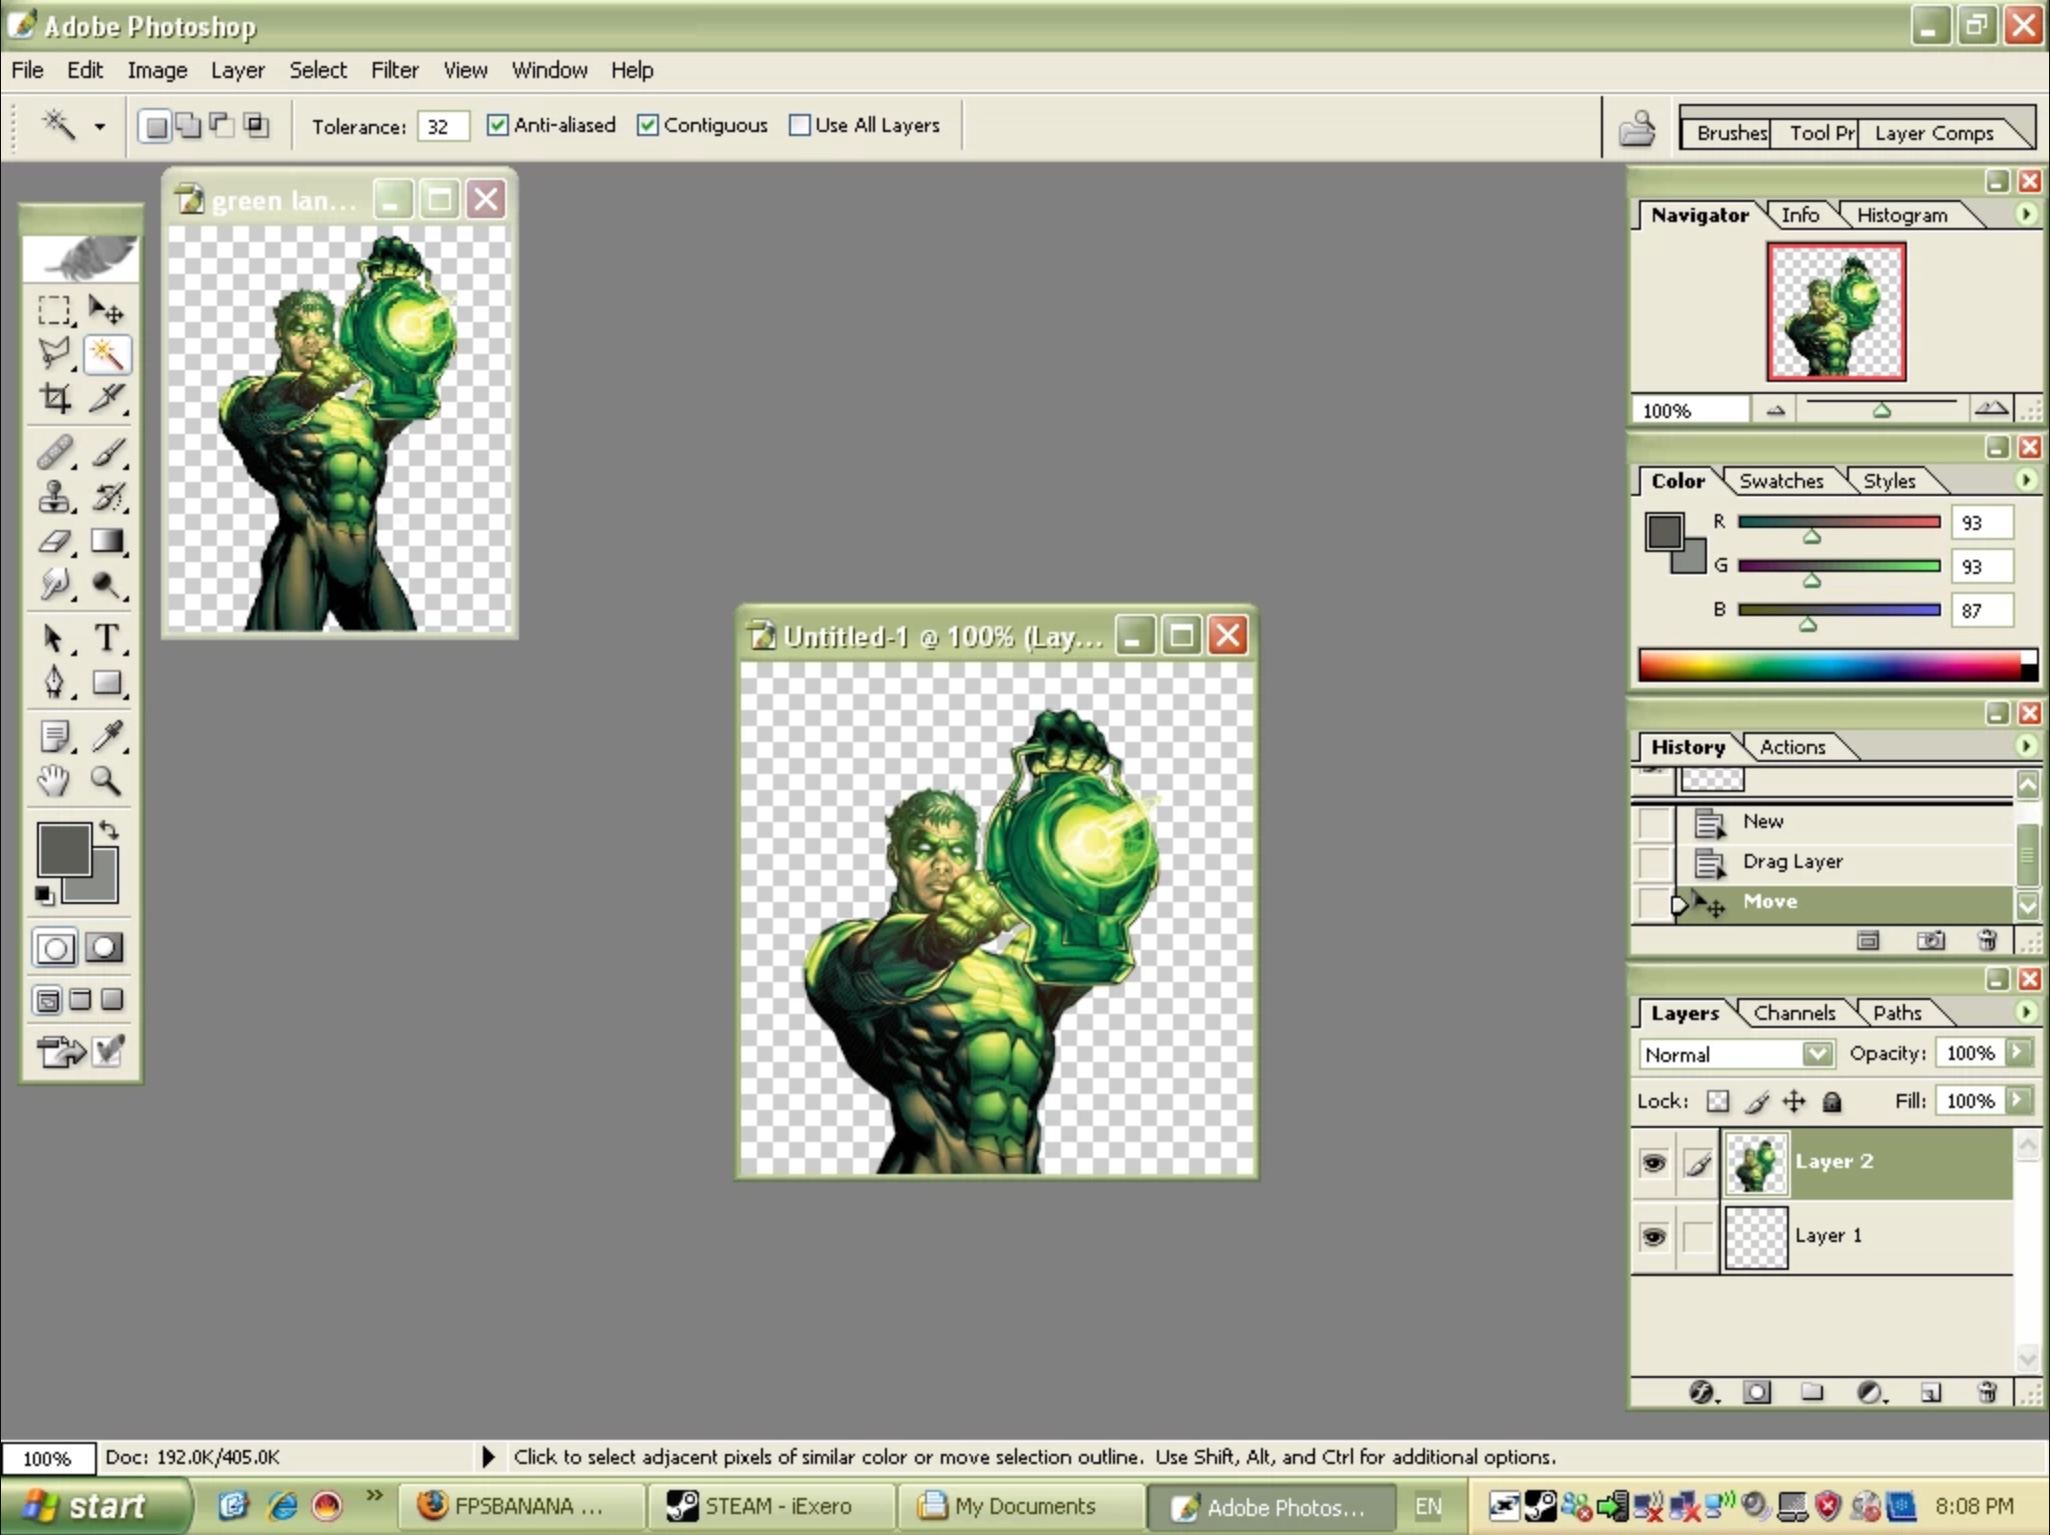 Adobe Photoshop CS for Windows Workspace (2003)